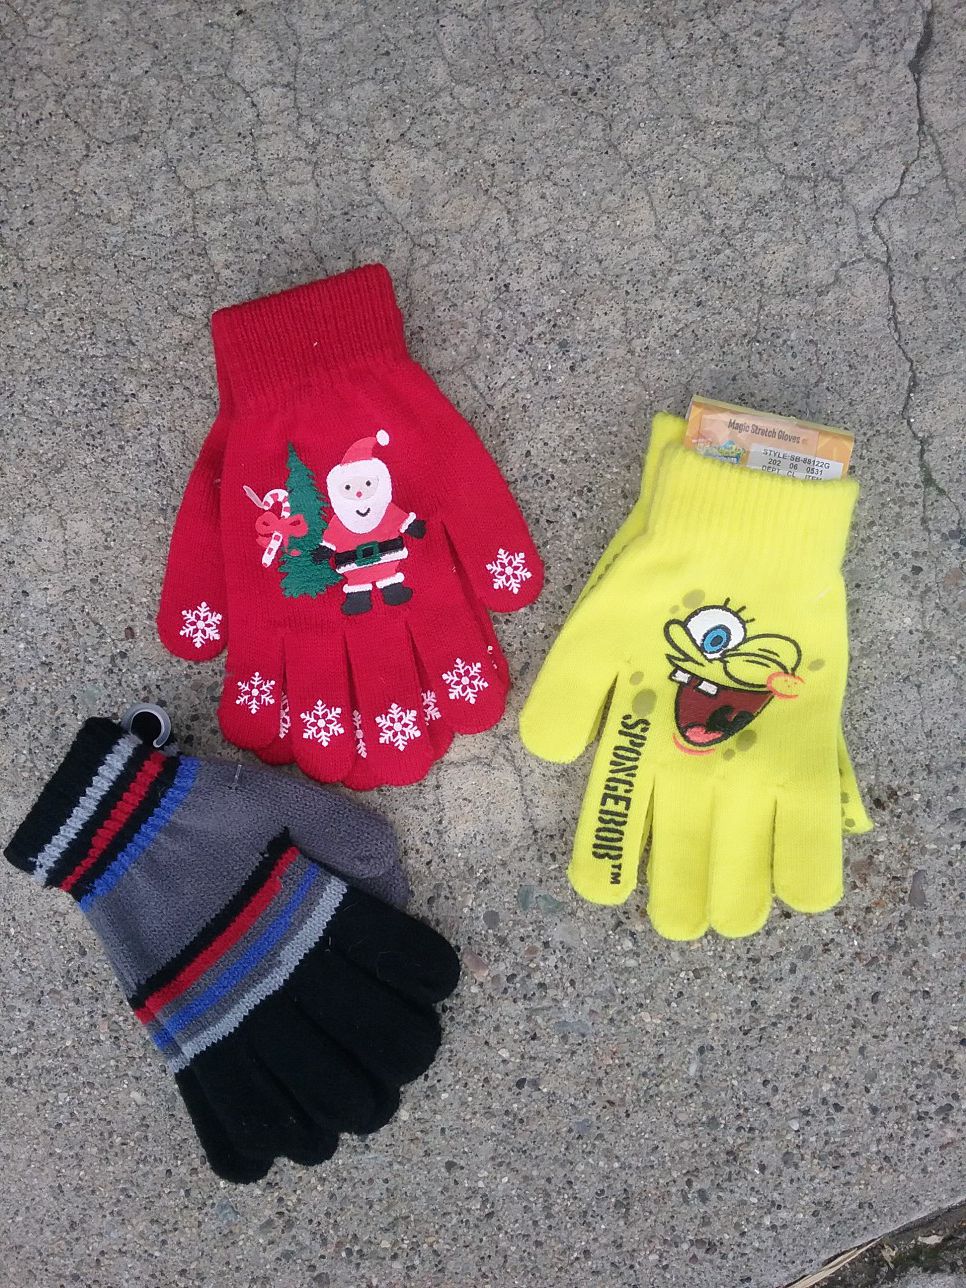 Kids gloves, $4 each, lots of snow stuff too.